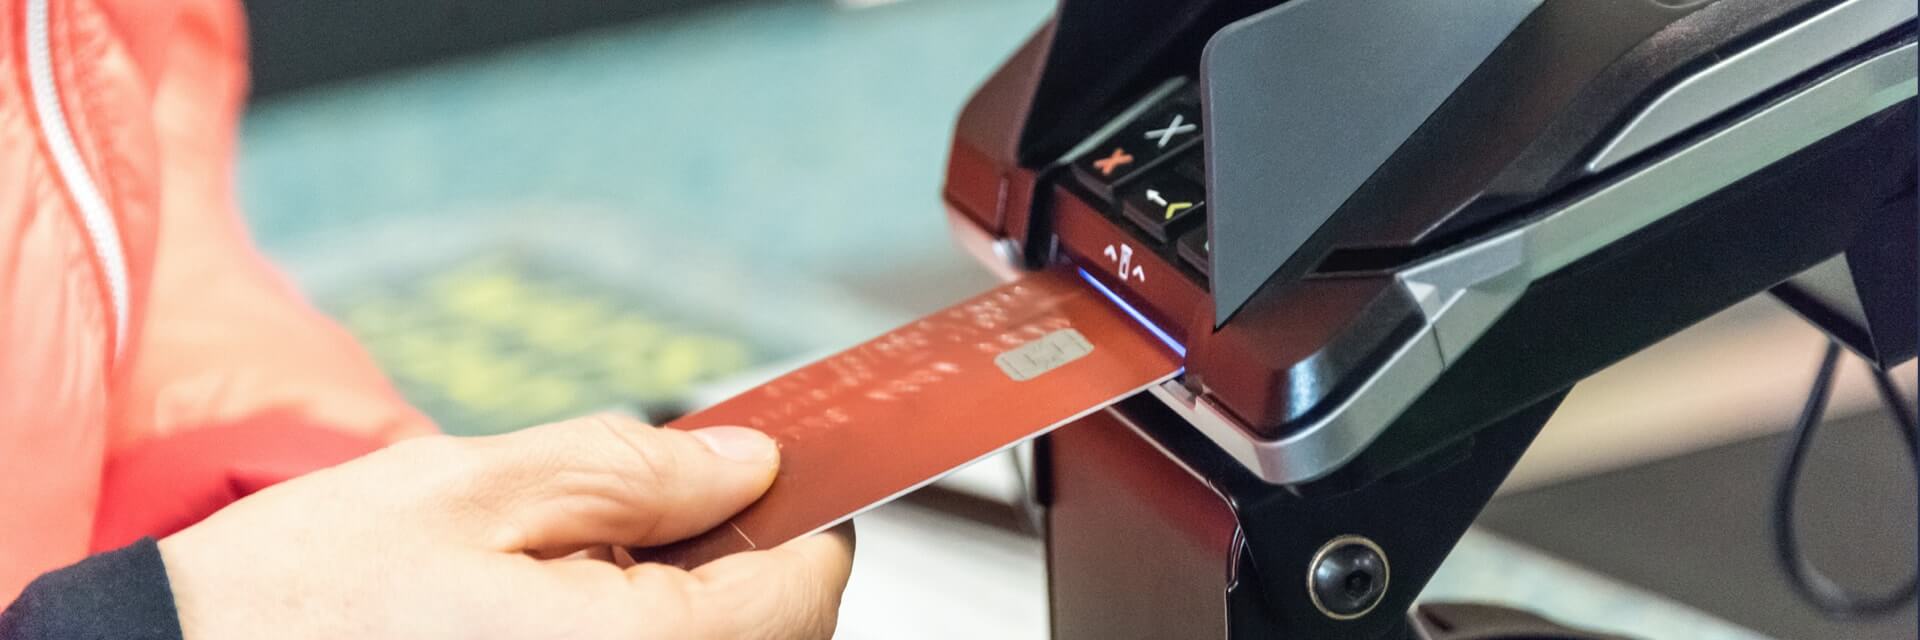 Credit card inserted in credit card machine